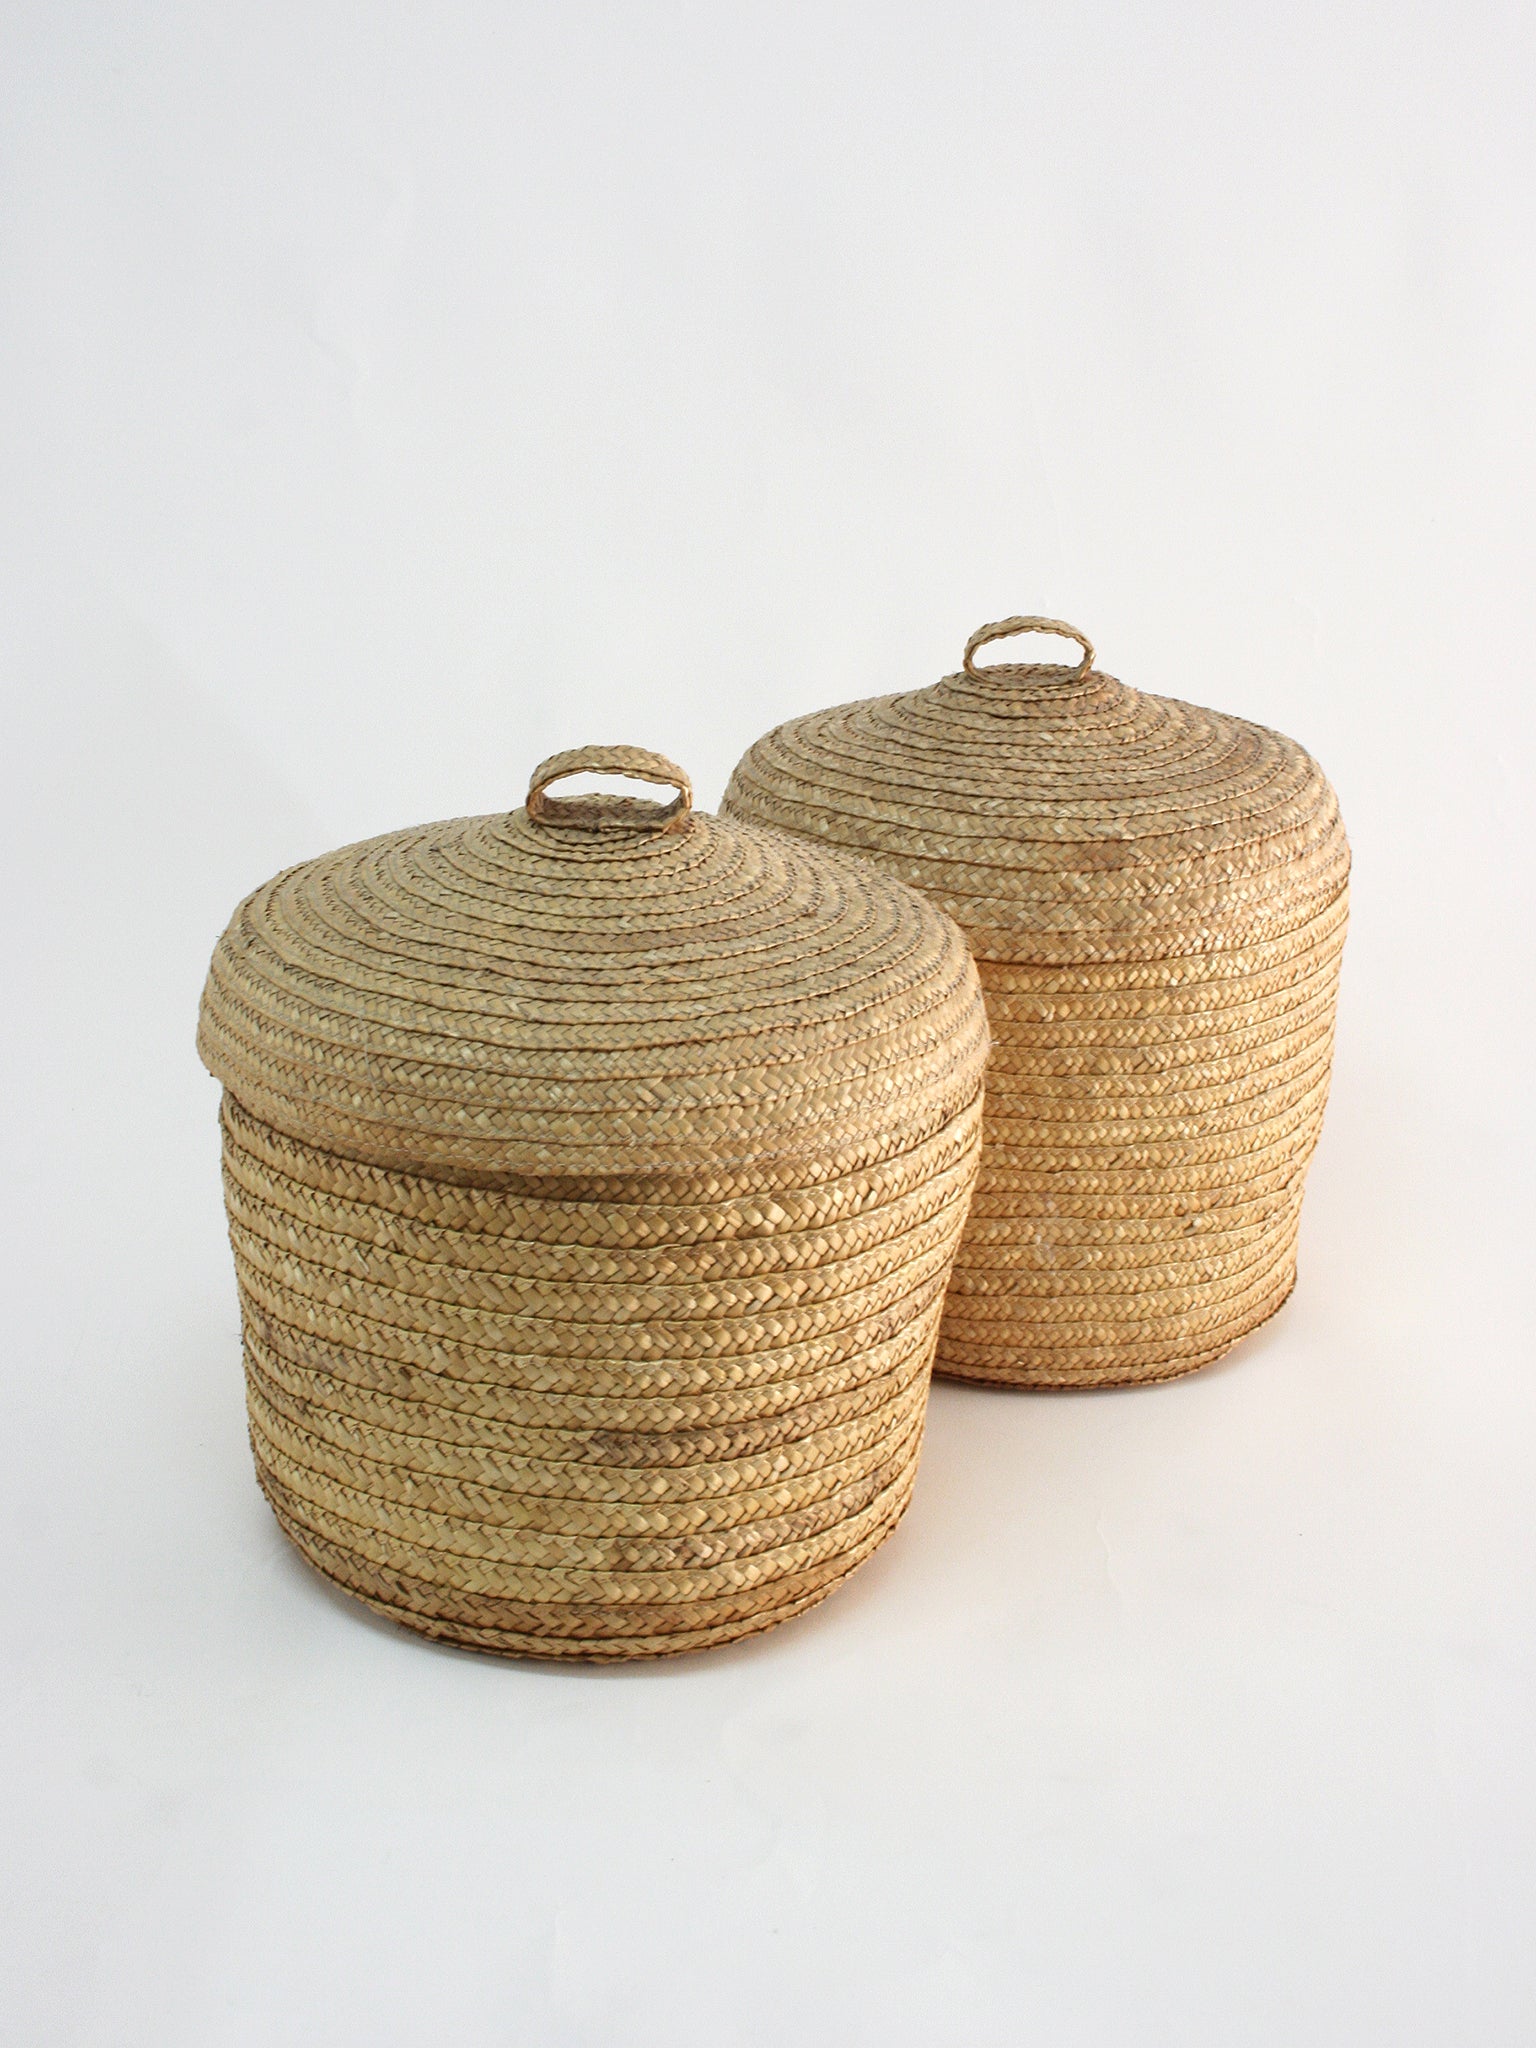 Straw basket, handcrafted